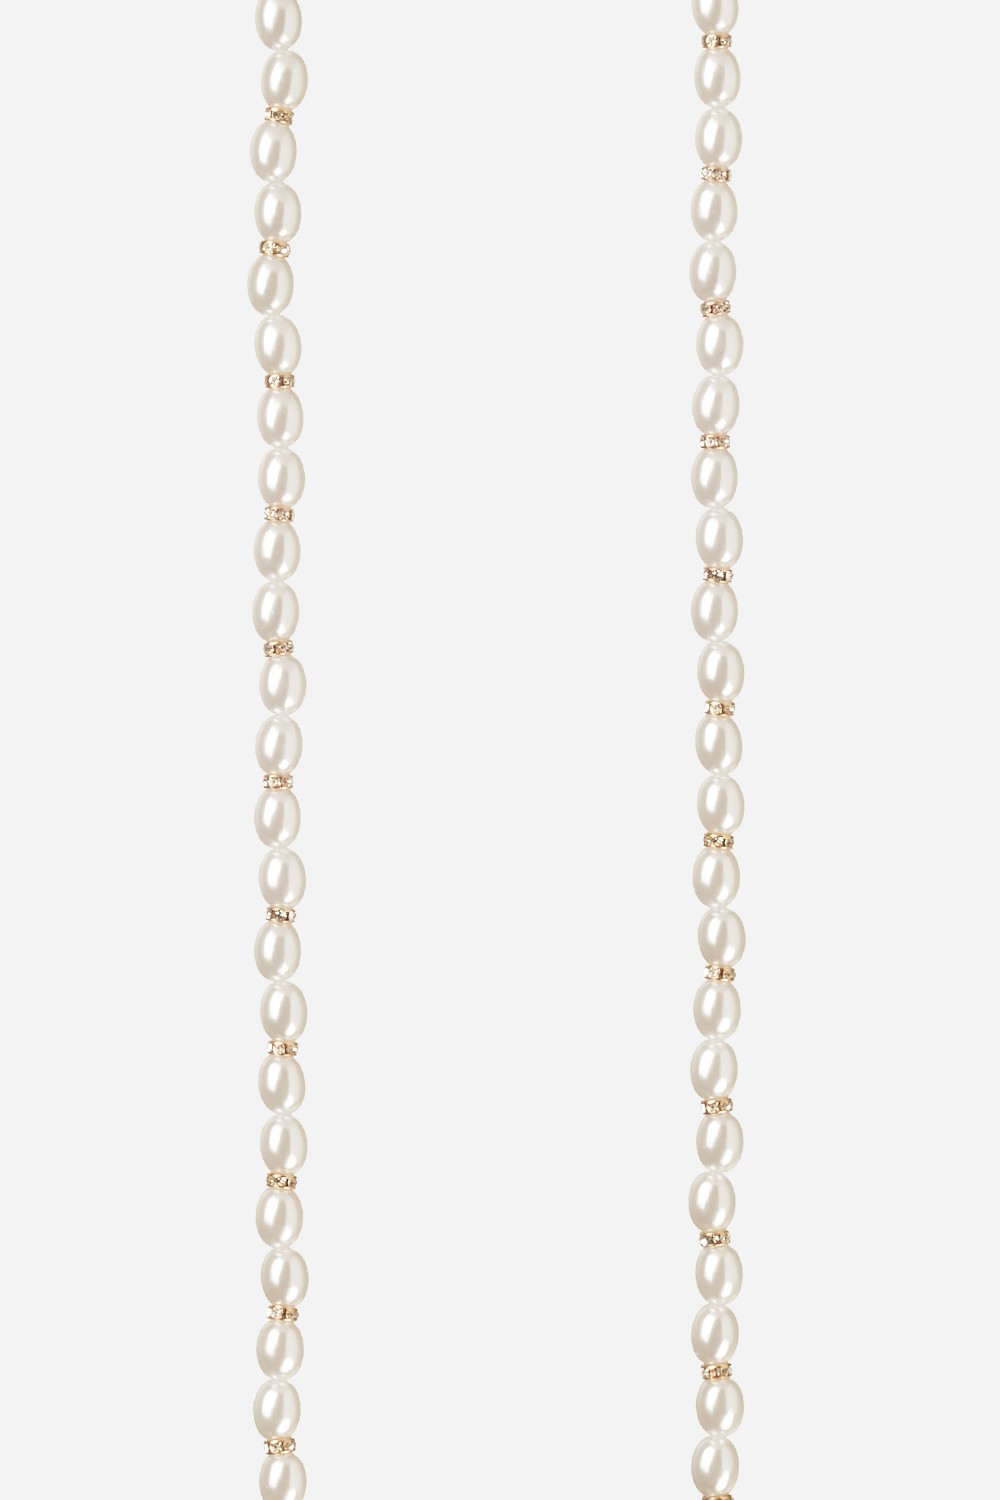 Chaine Longue Mareva Blanc 120 cm